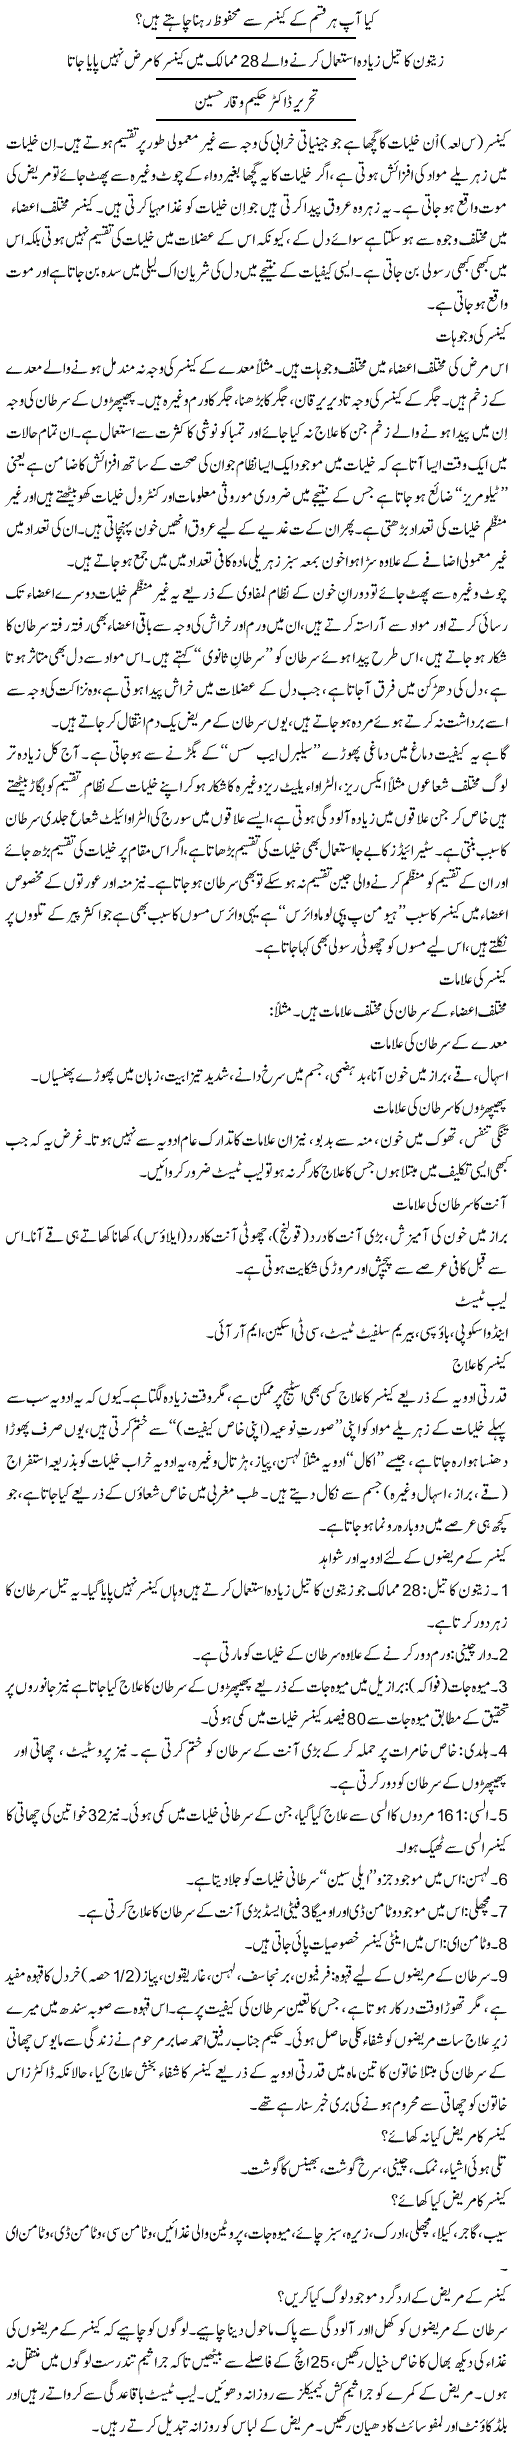 Cancer Symptoms, Causes, Prevention, Treatment, Diet, Tips (Urdu-English)